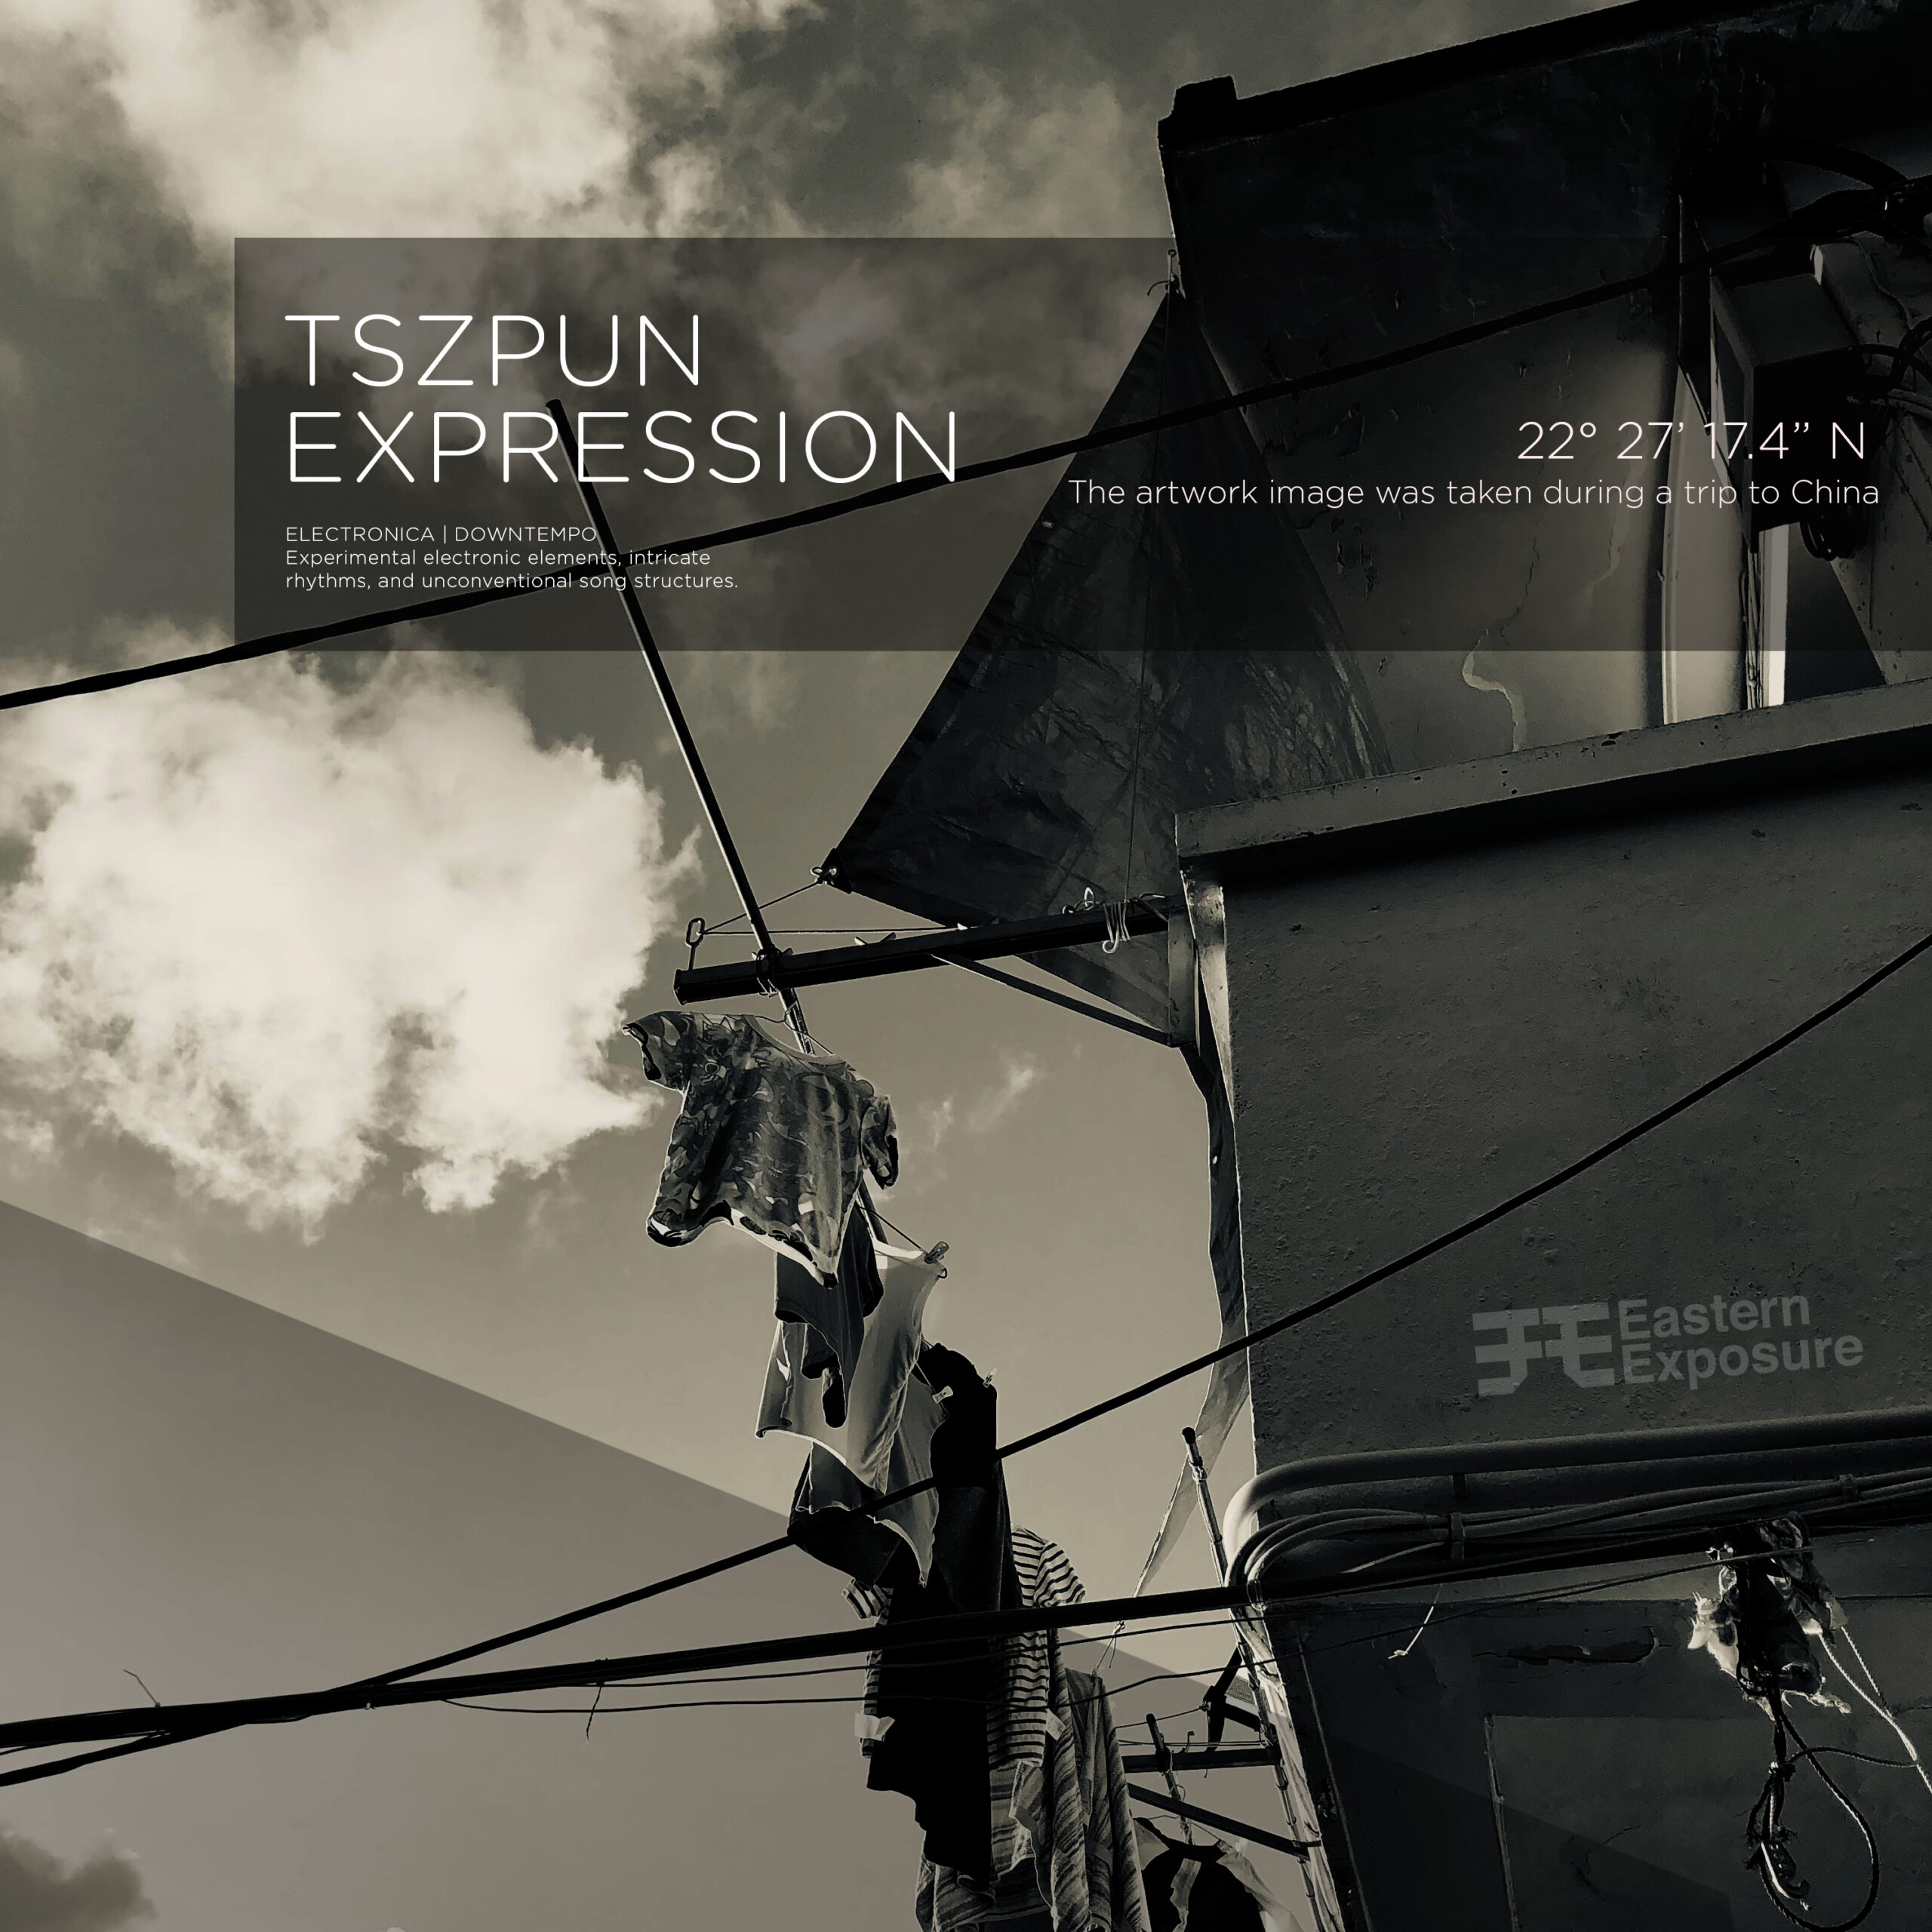 Sleeve artwork of Tszpun's music creation Expression